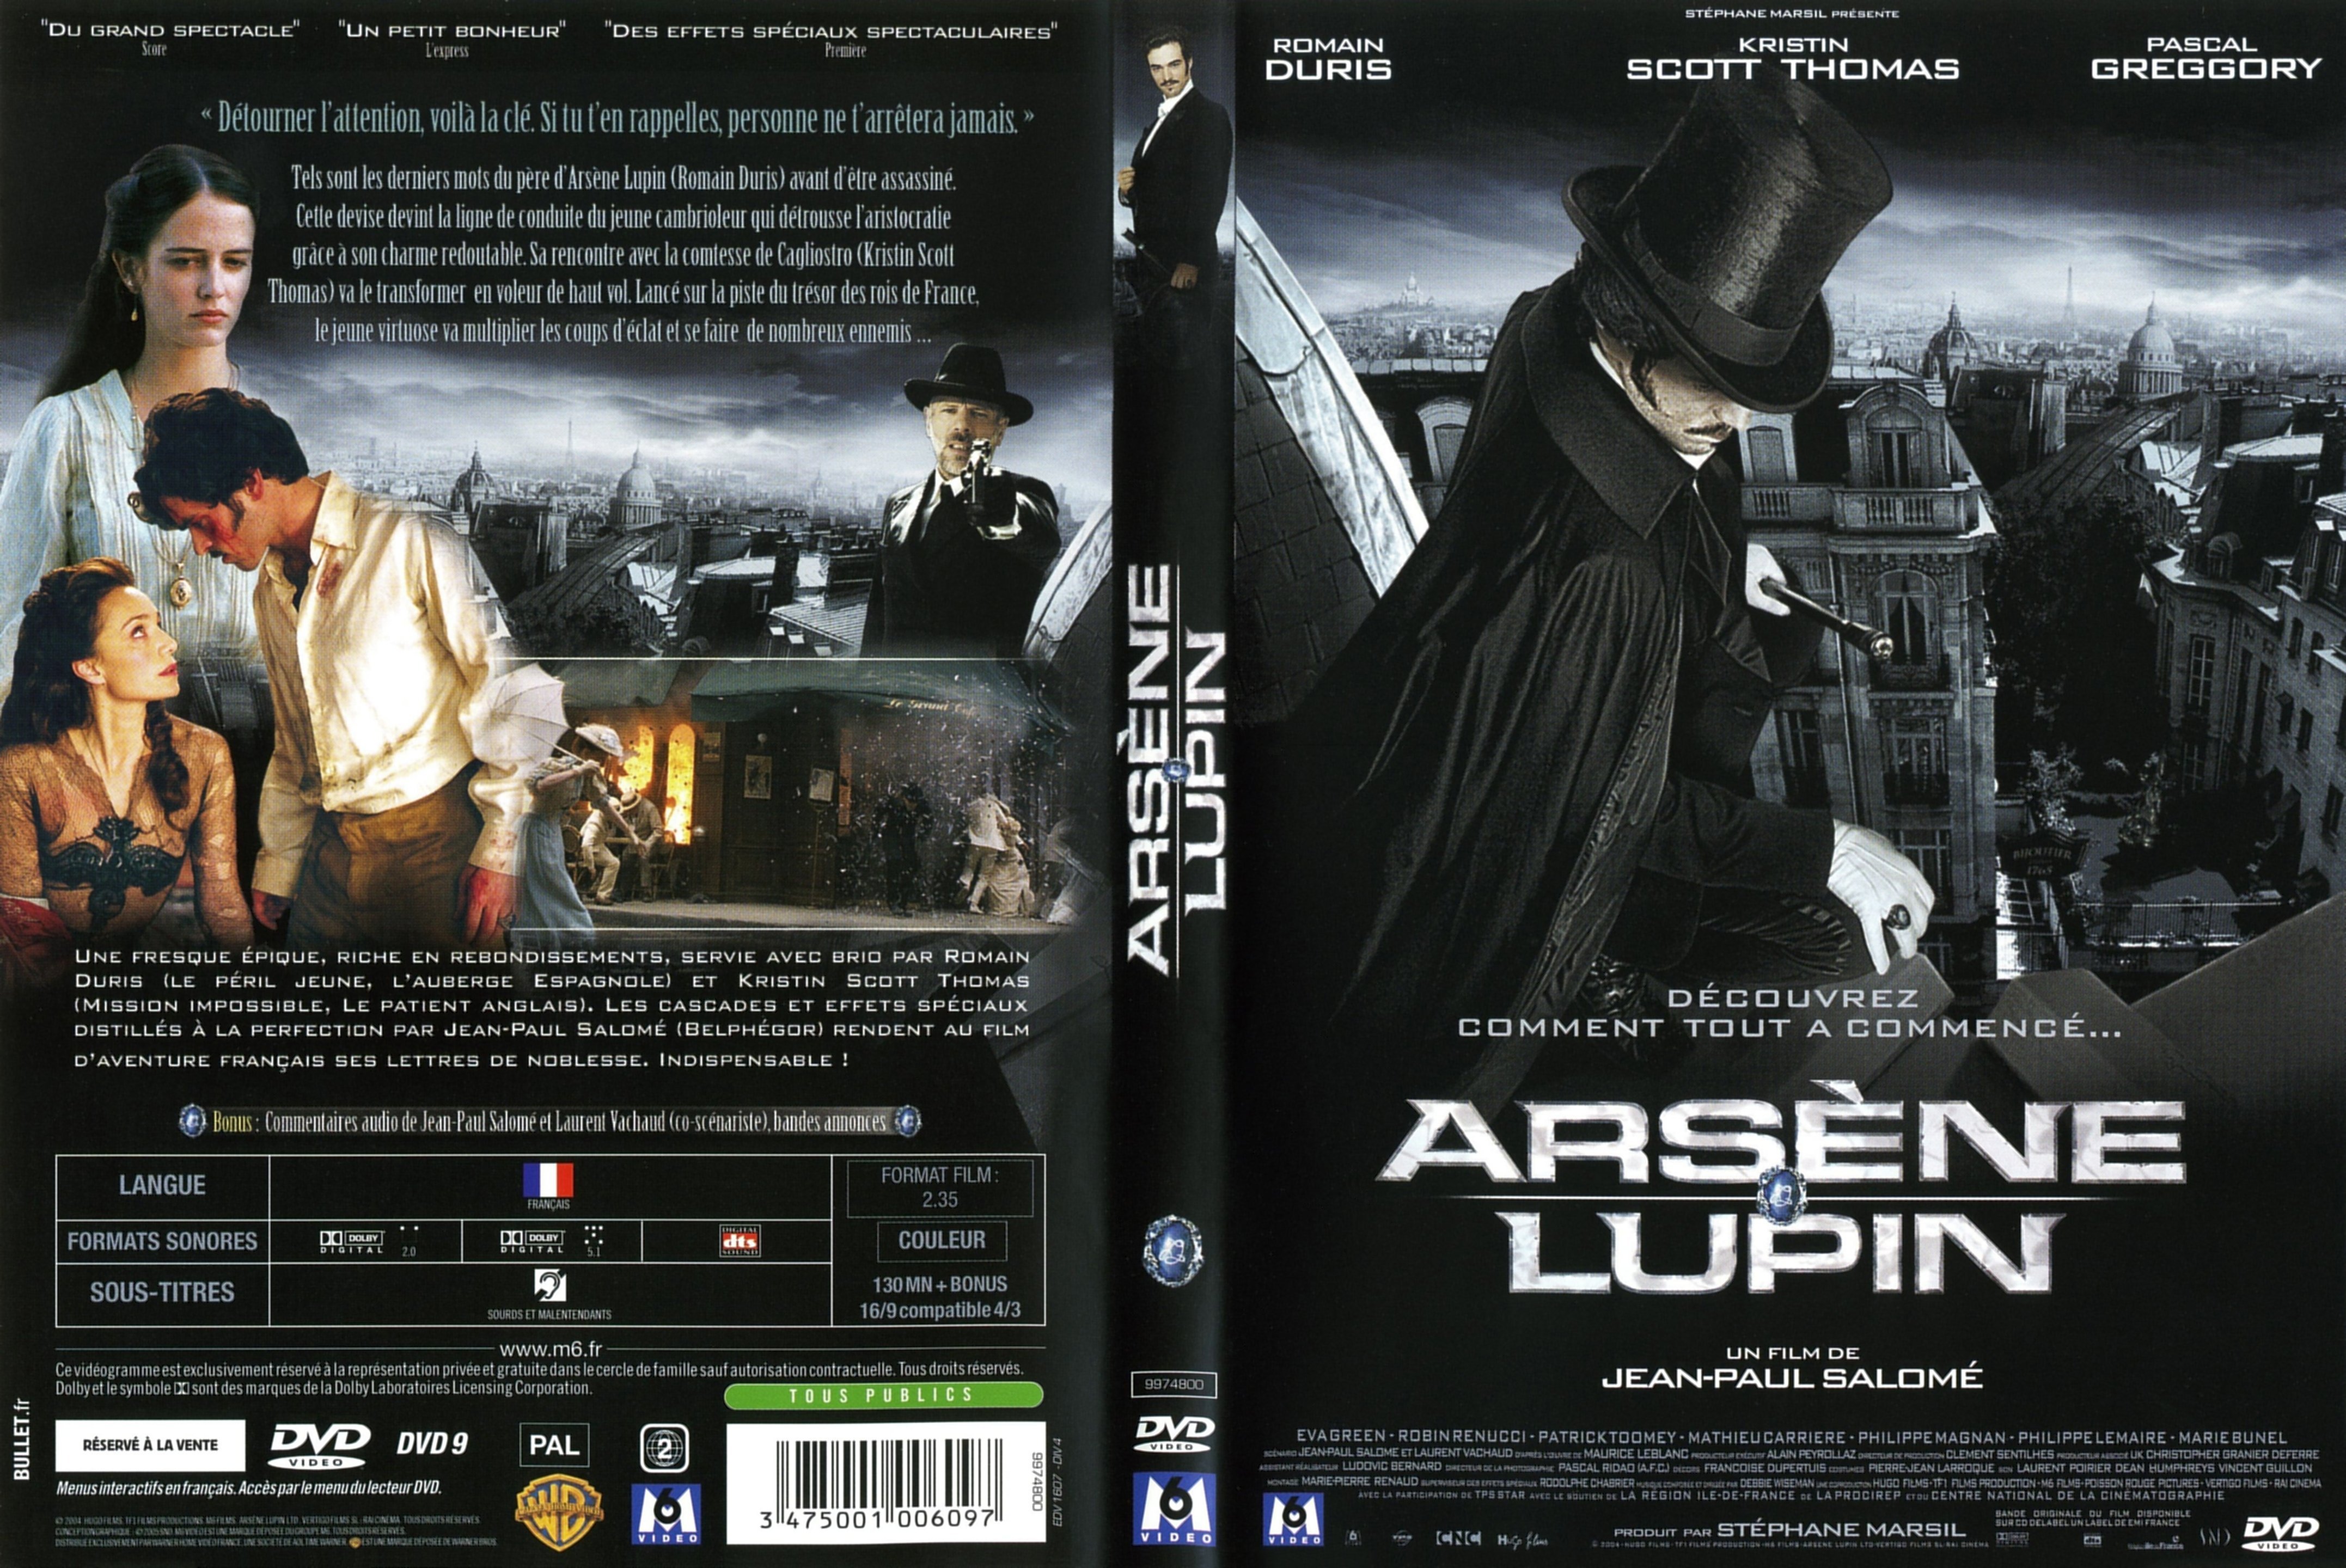 Jaquette DVD Arsene Lupin